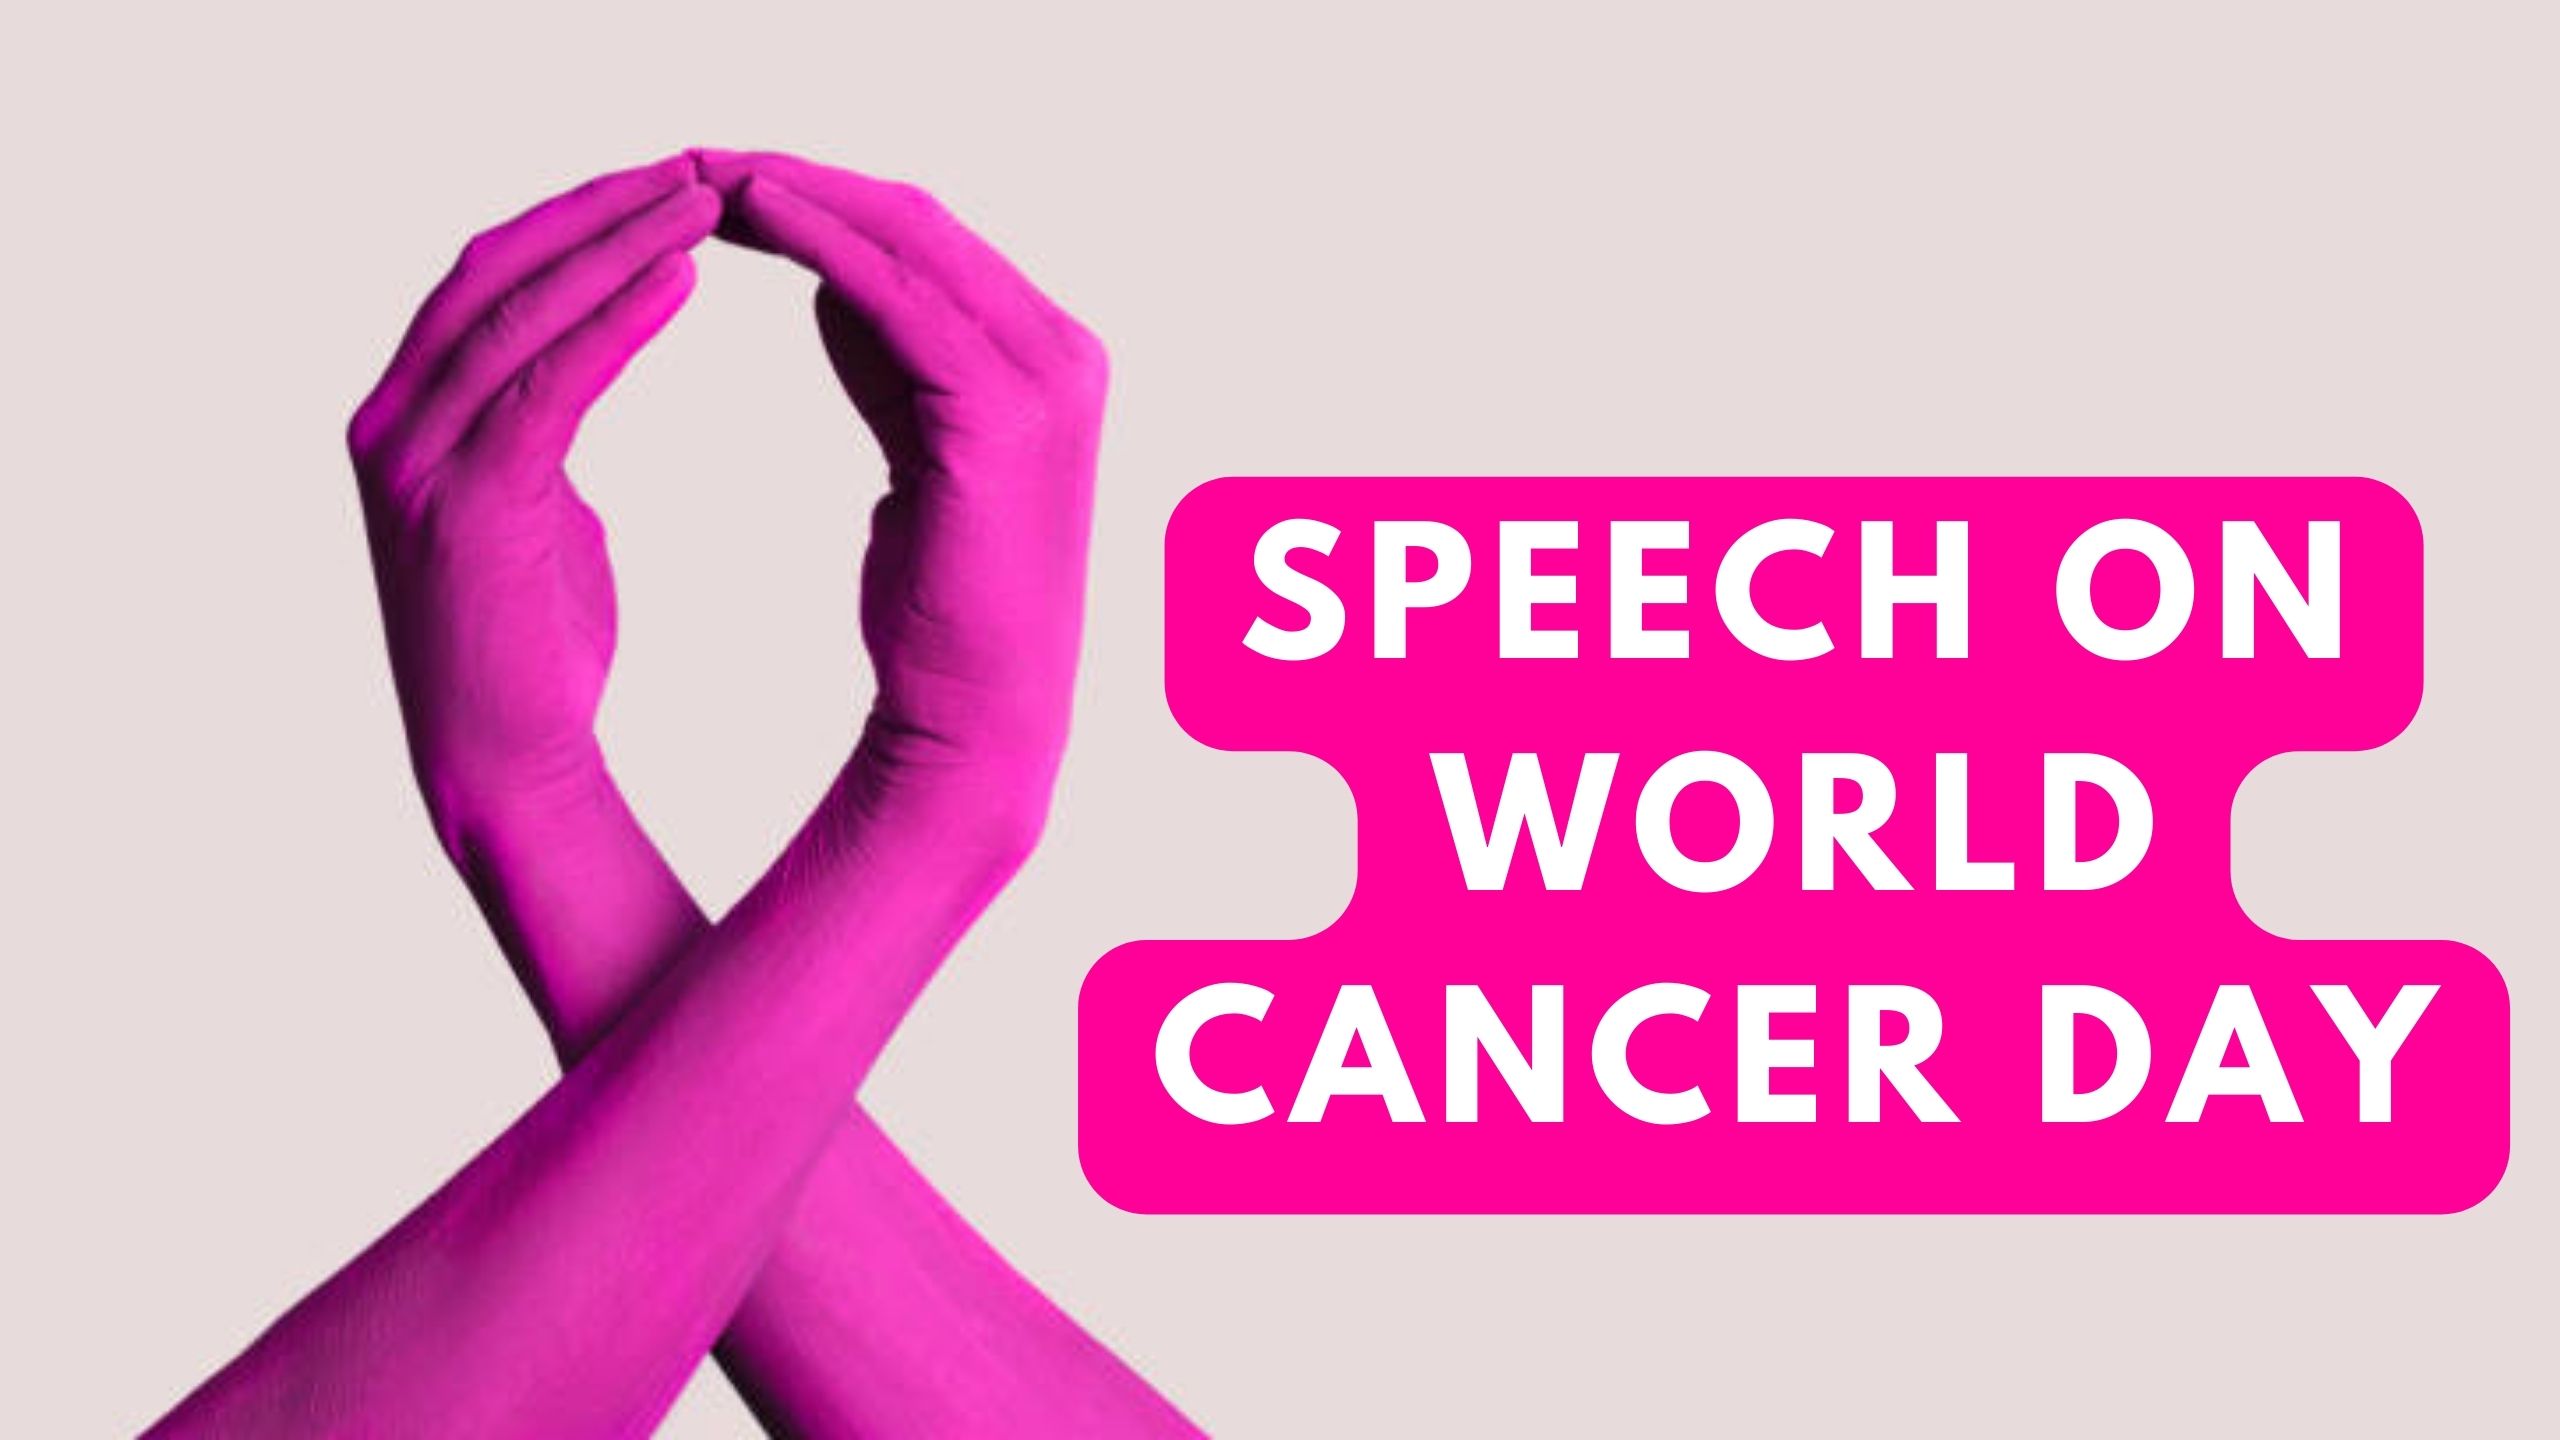 Speech on world cancer day